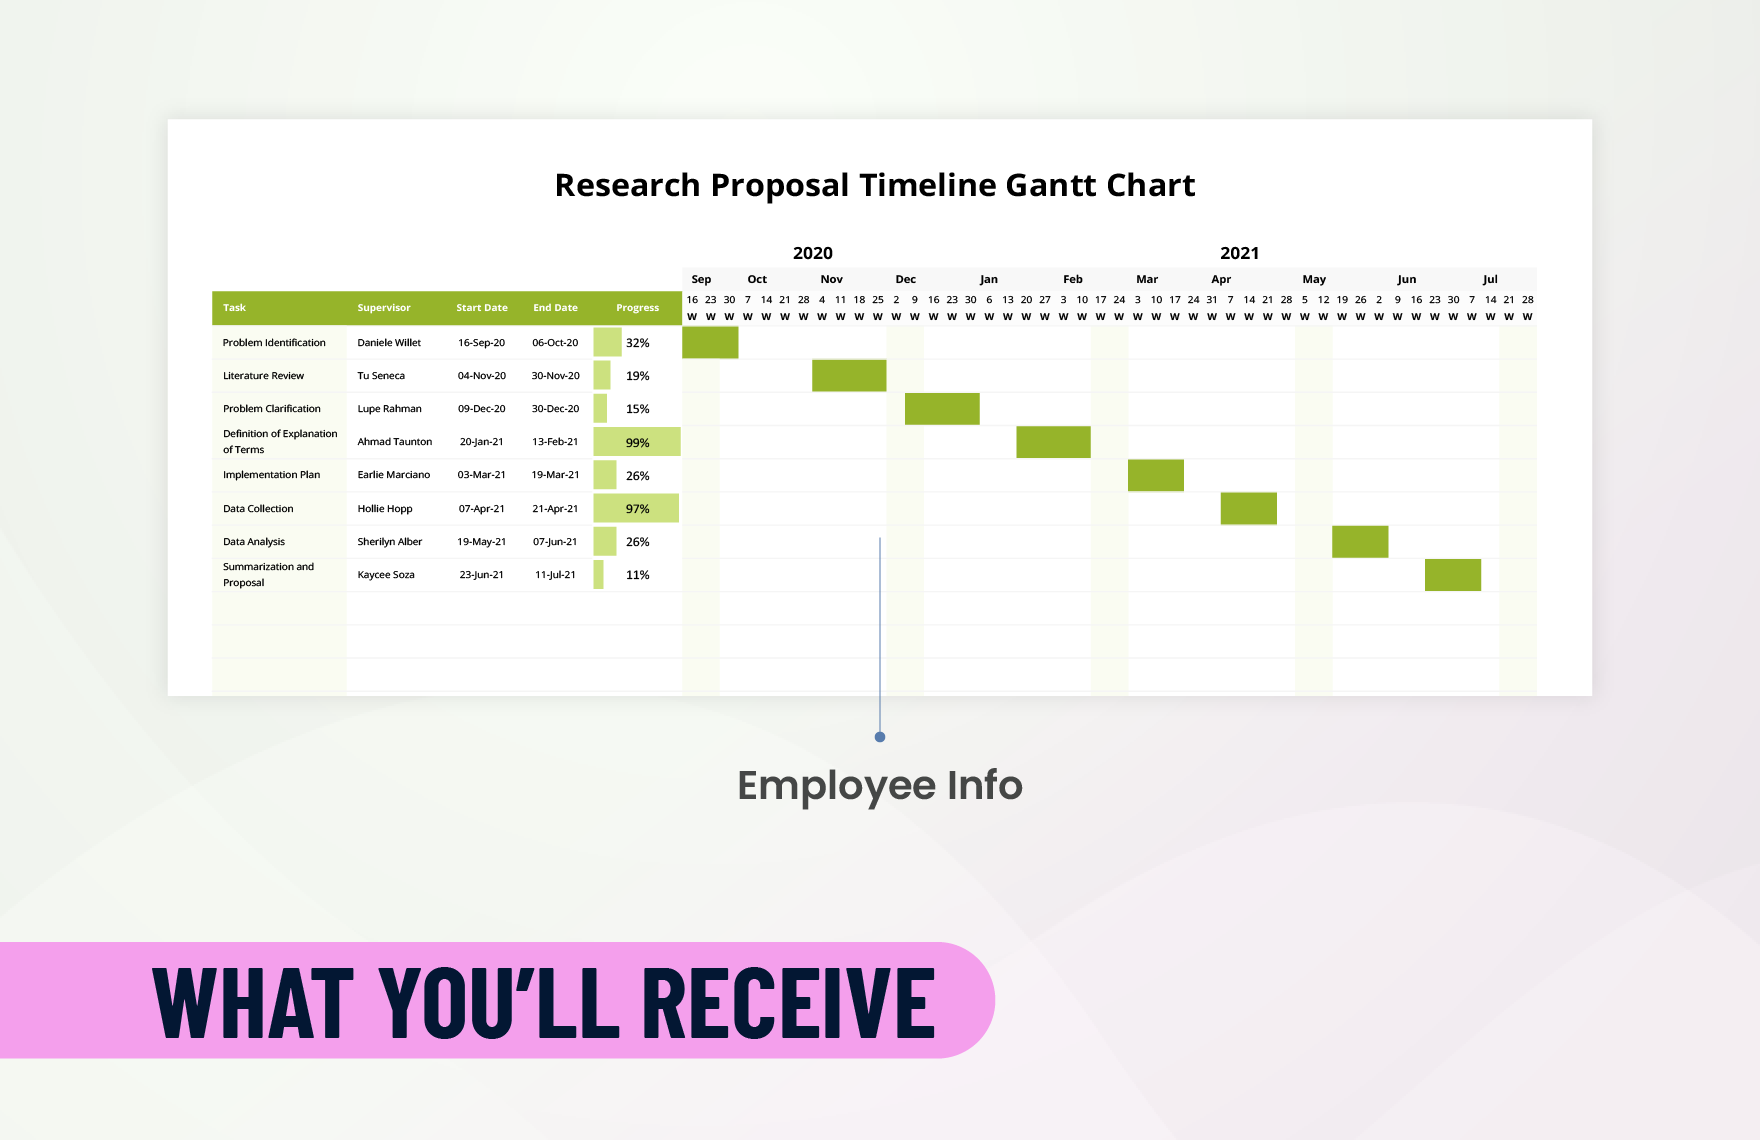 Research Proposal Timeline Gantt Chart Template